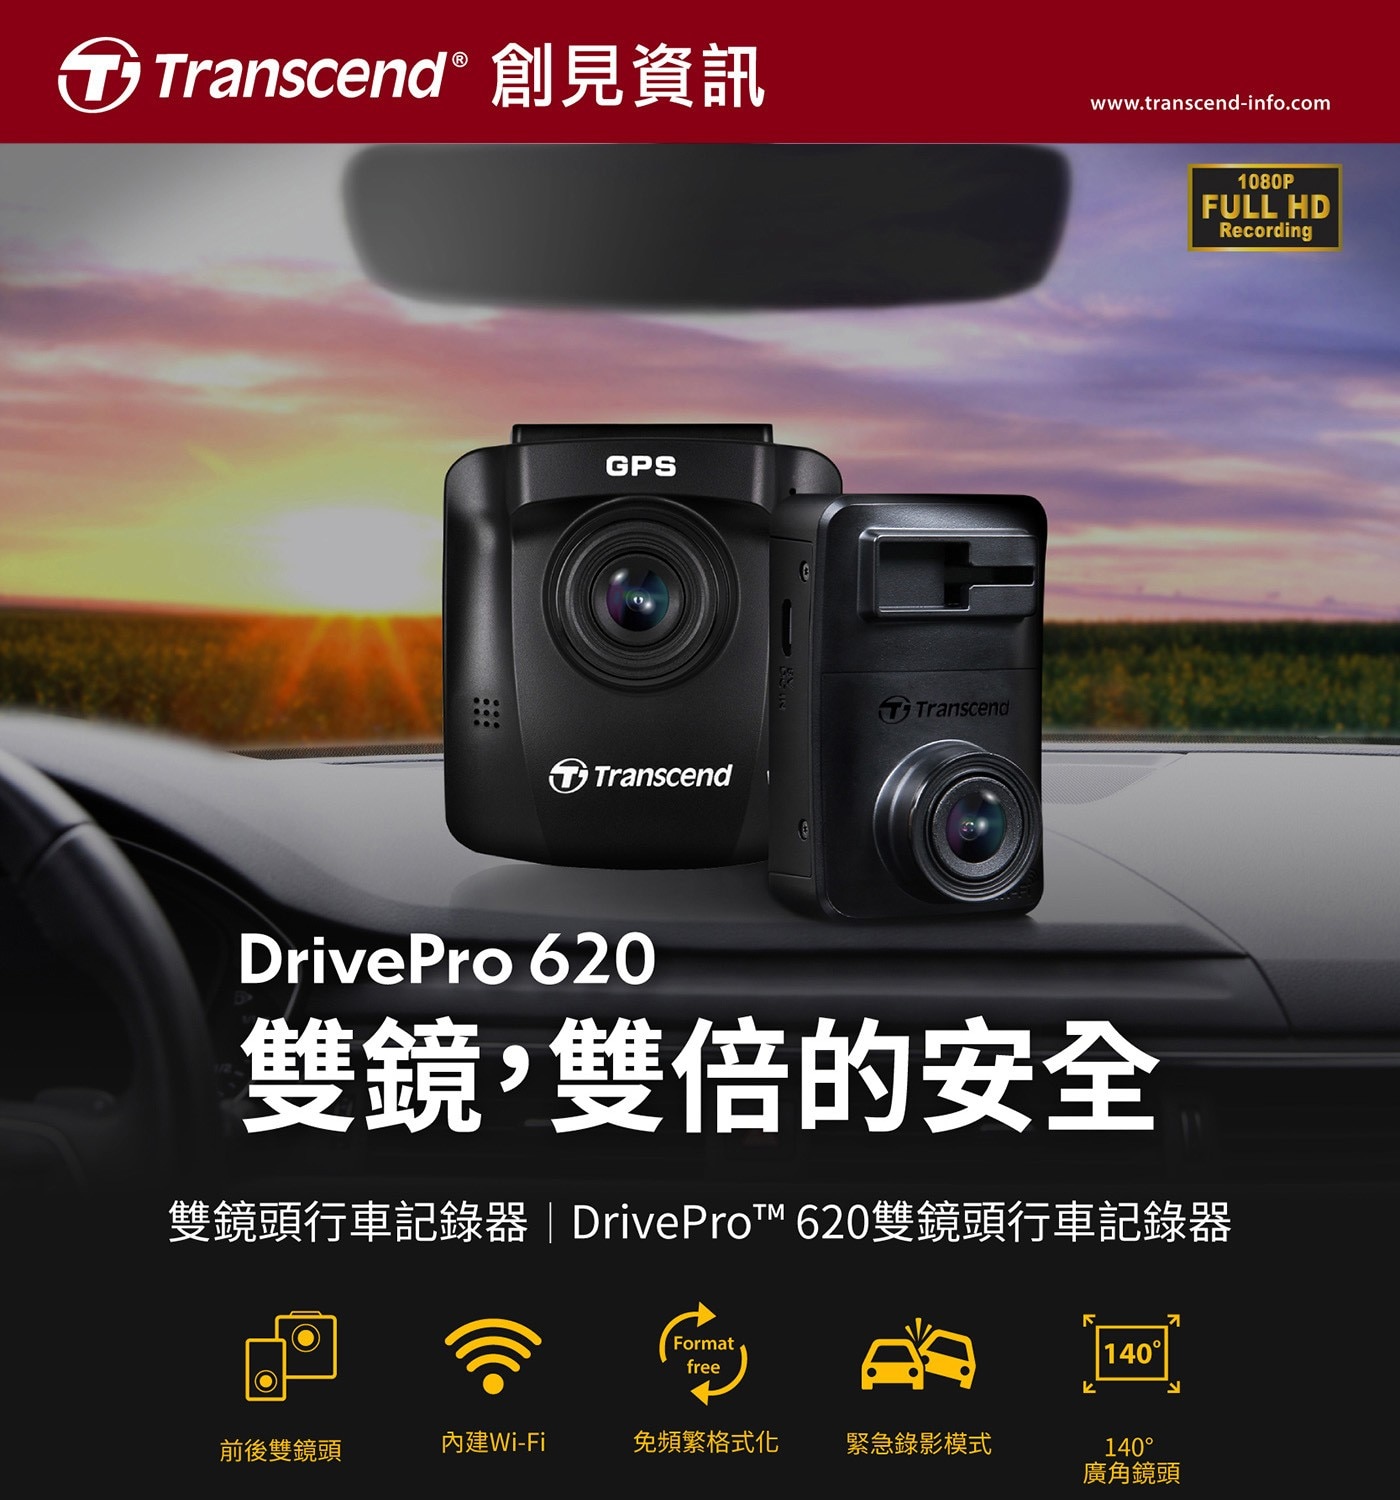 Transcend 創見 DrivePro™ 620 行車記錄器，附 64G 記憶卡，清晰畫面全都錄，體現安全美學，高感光元件，夜間拍攝也清晰。